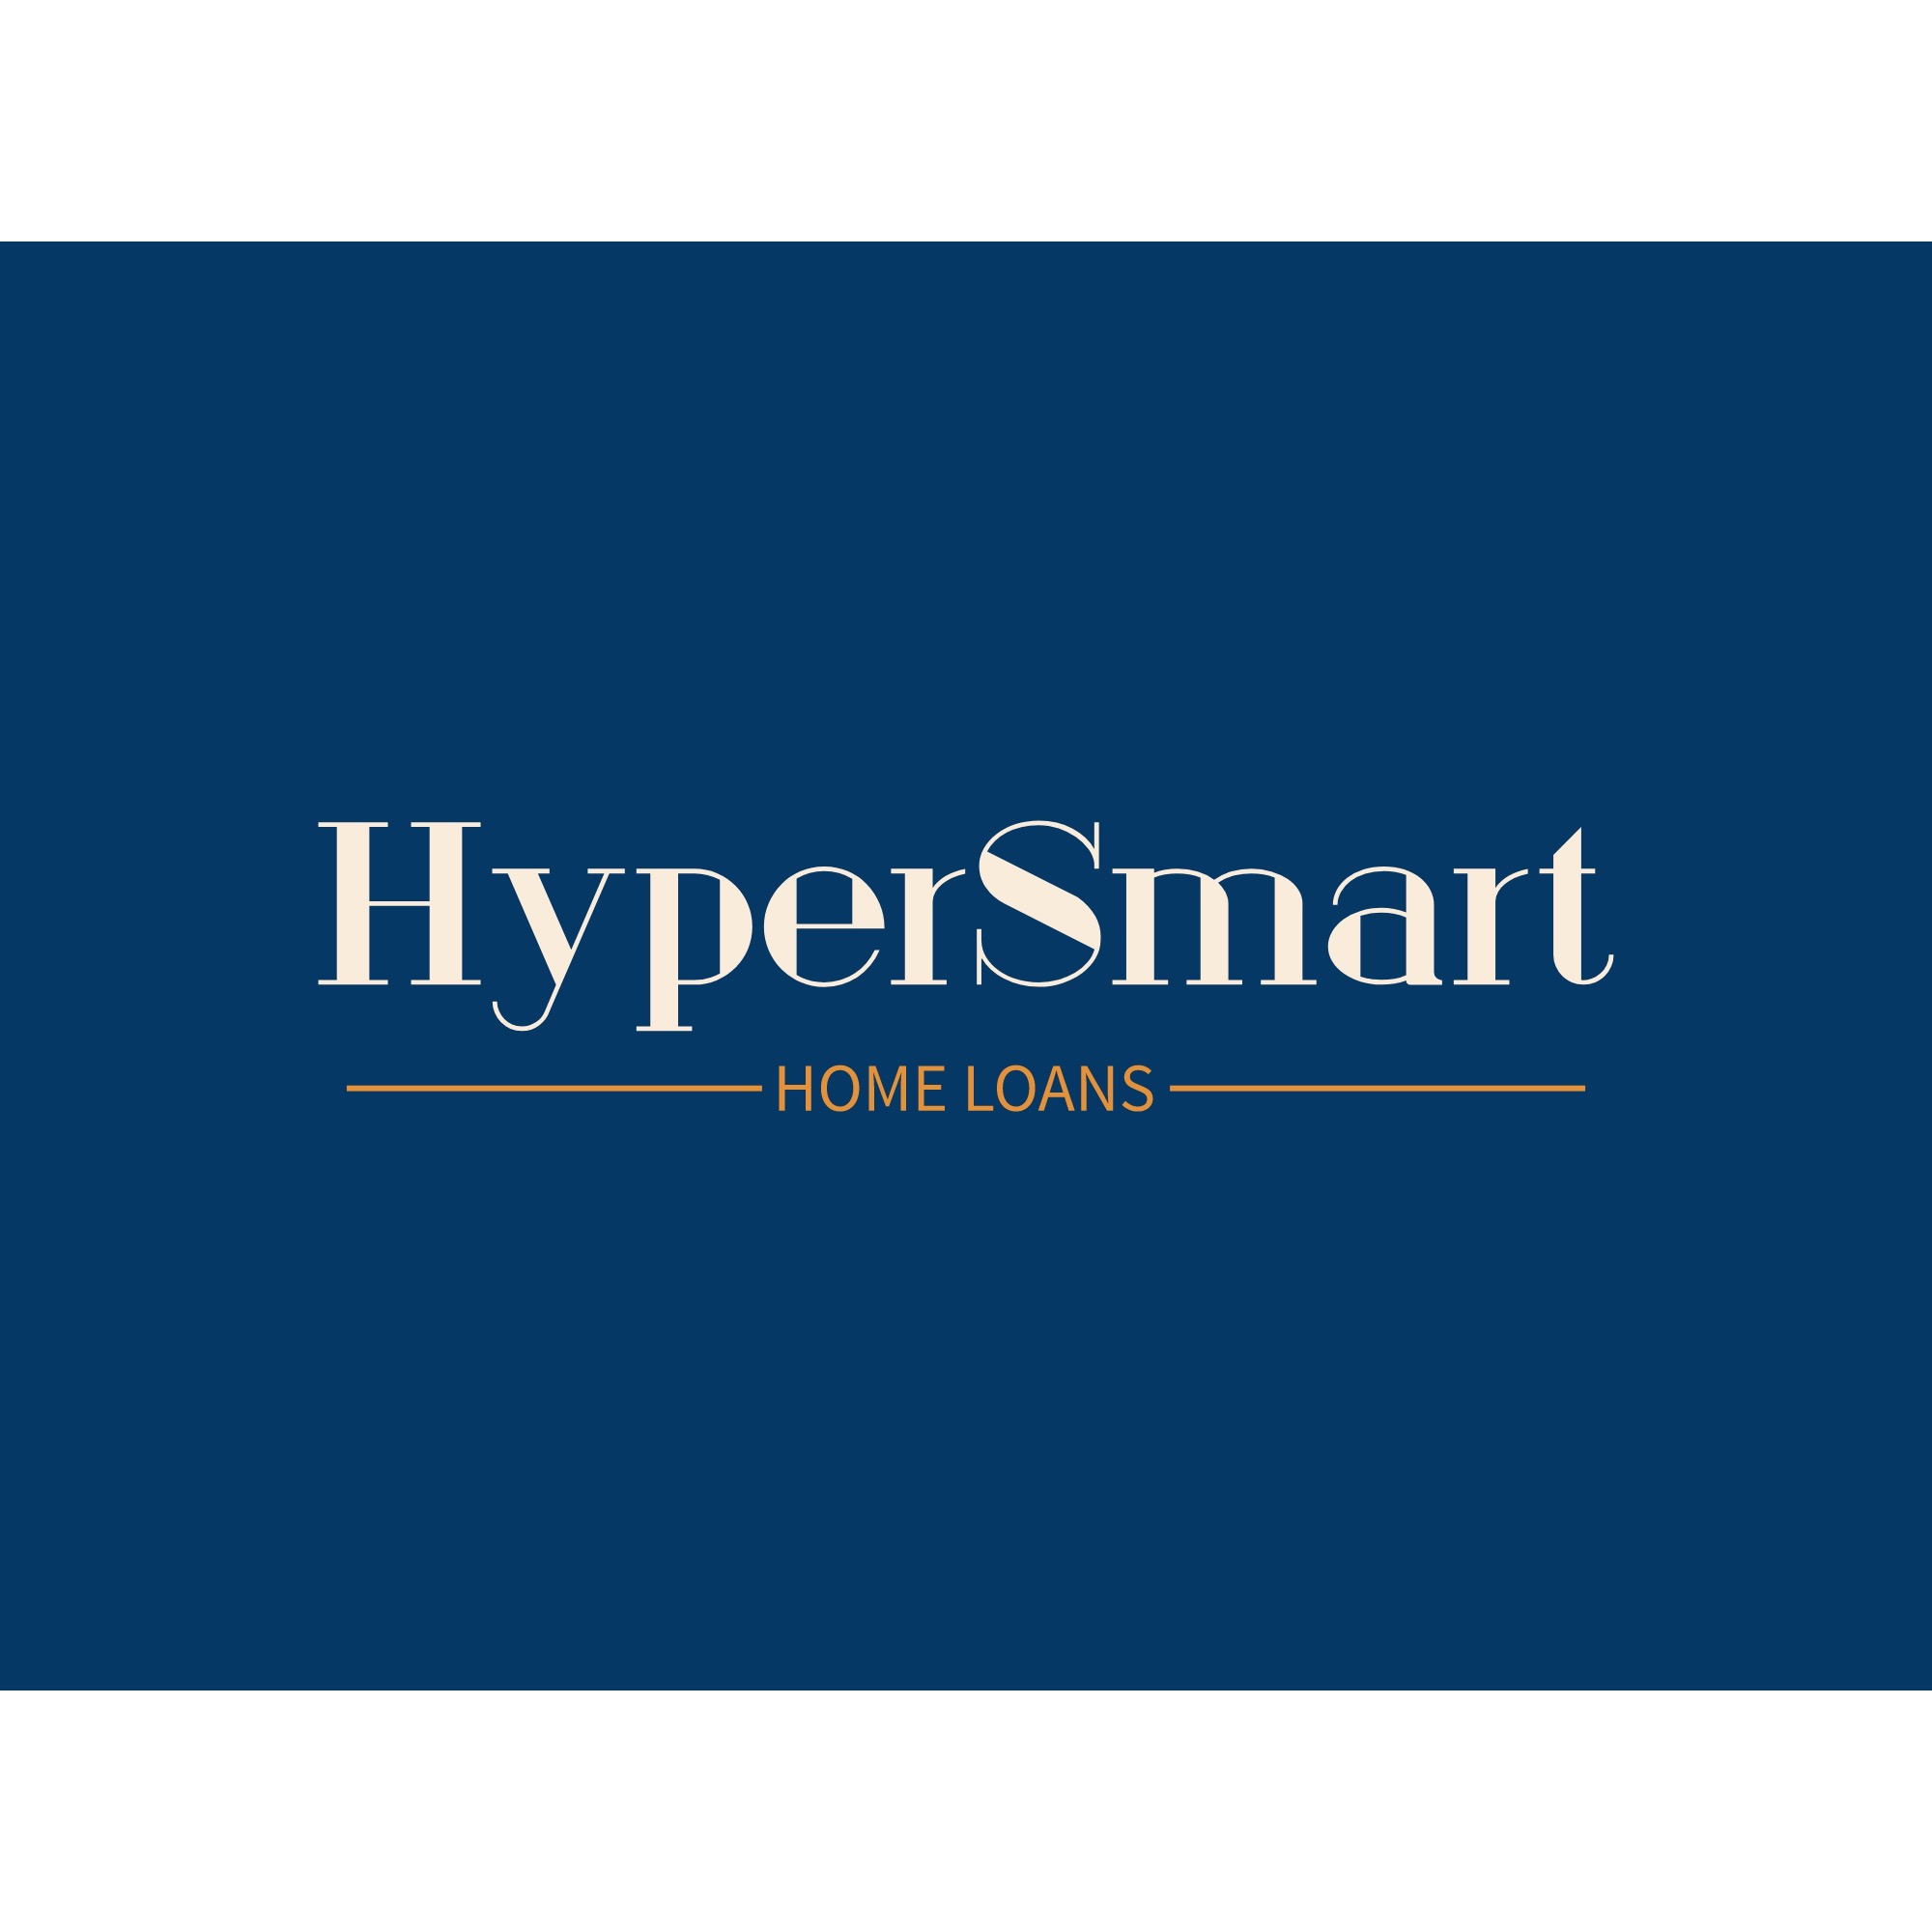 HyperSmart Home Loans